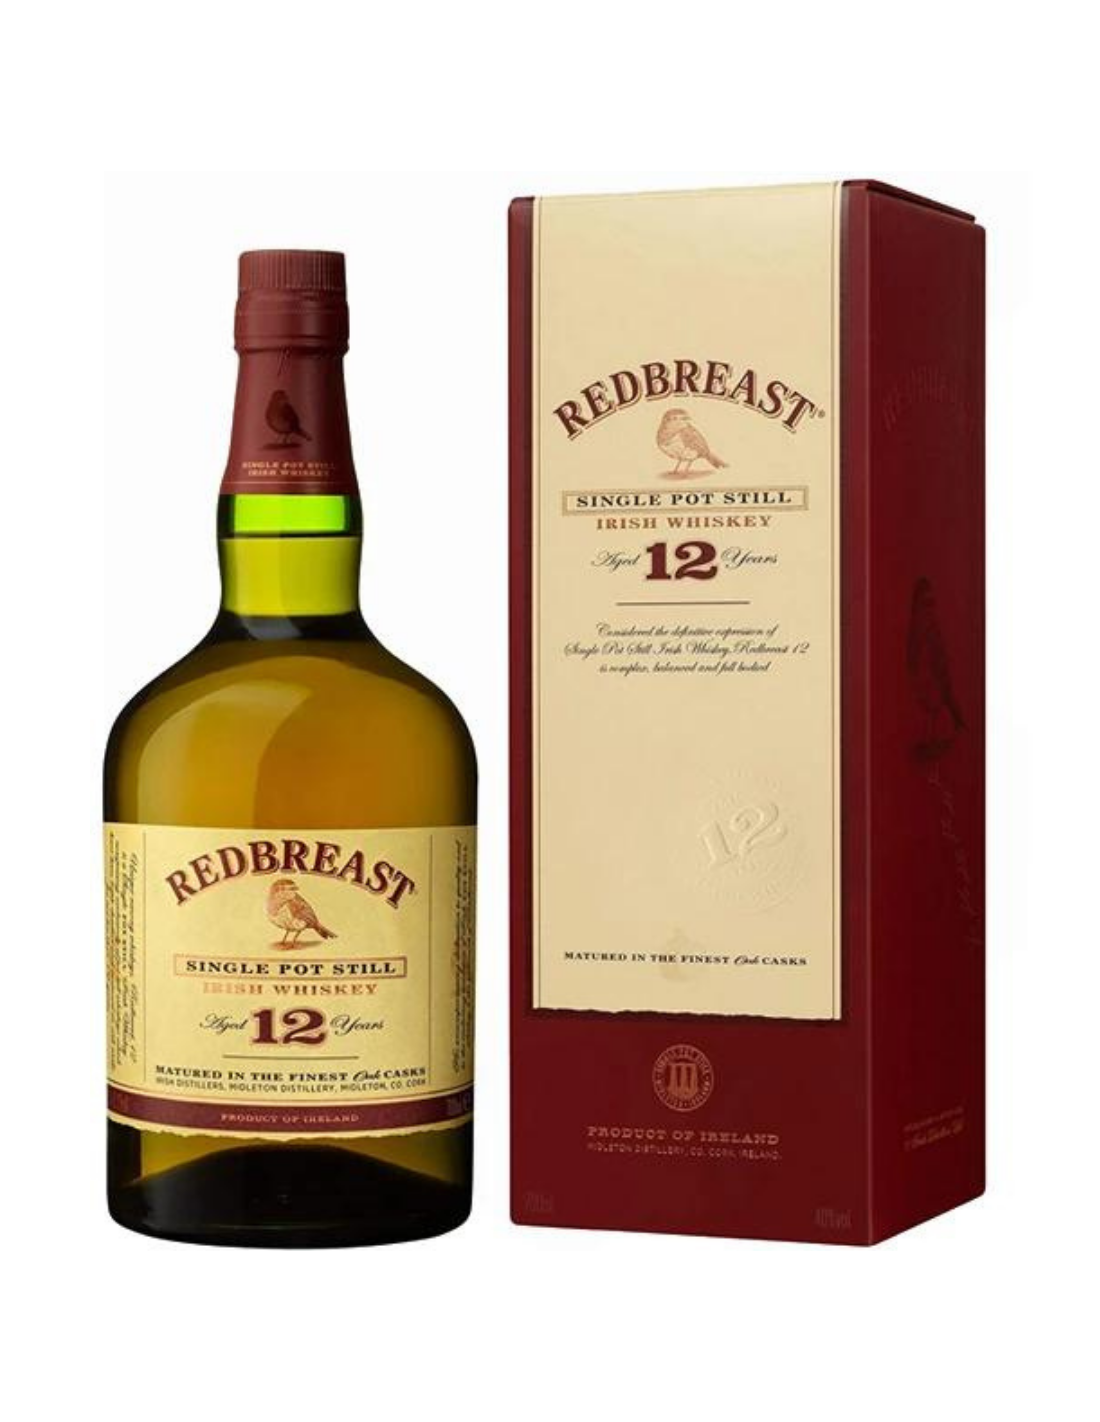 Whisky Redbreast Single Pot Still 12 Years, 0.7L, 40% alc., Irlanda alcooldiscount.ro